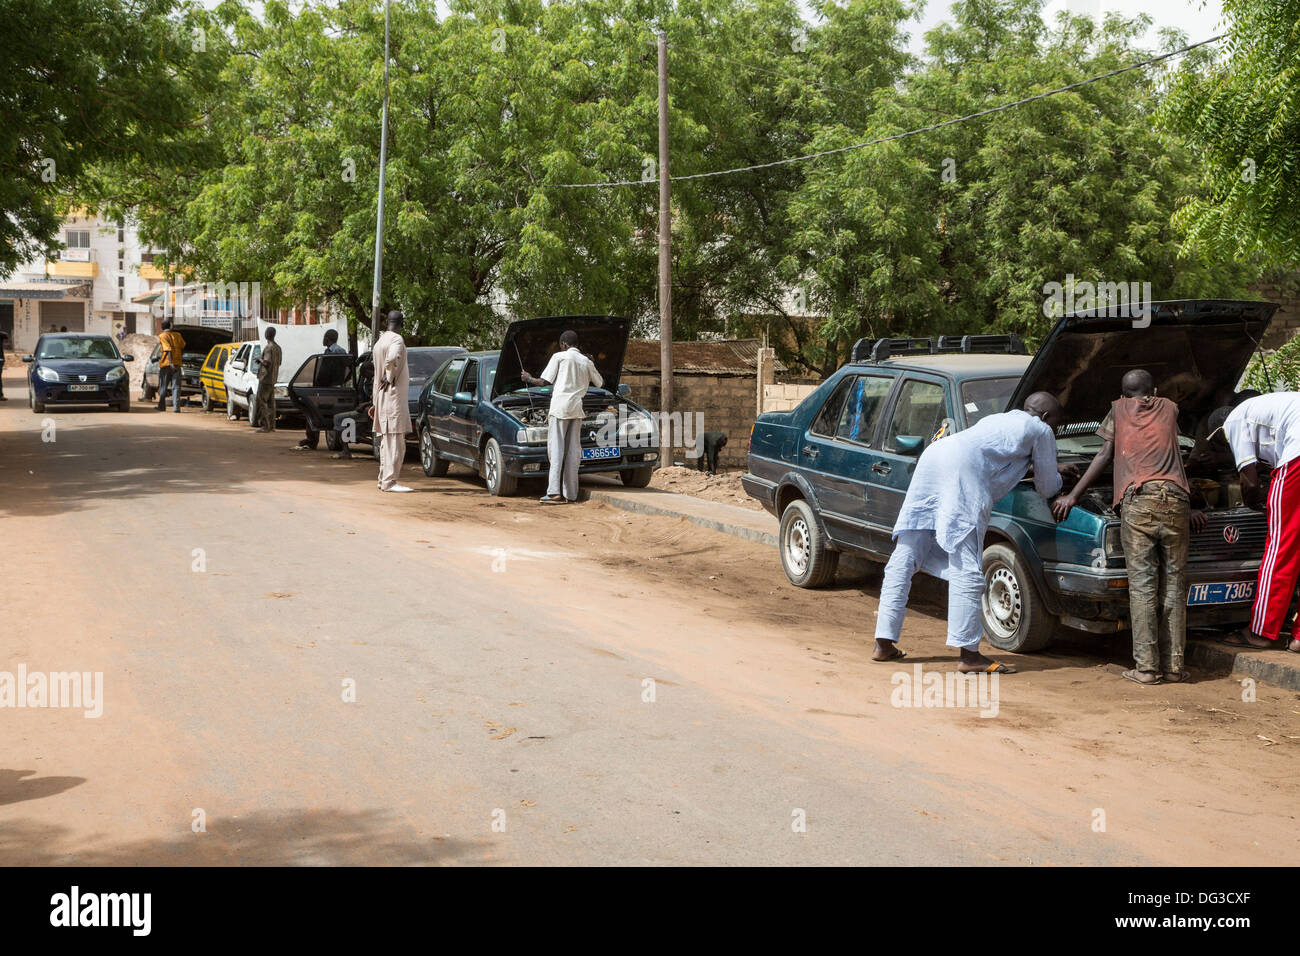 Senegal, Touba. Street Scene. Auto Repair Shop, Low Overhead. Stock Photo